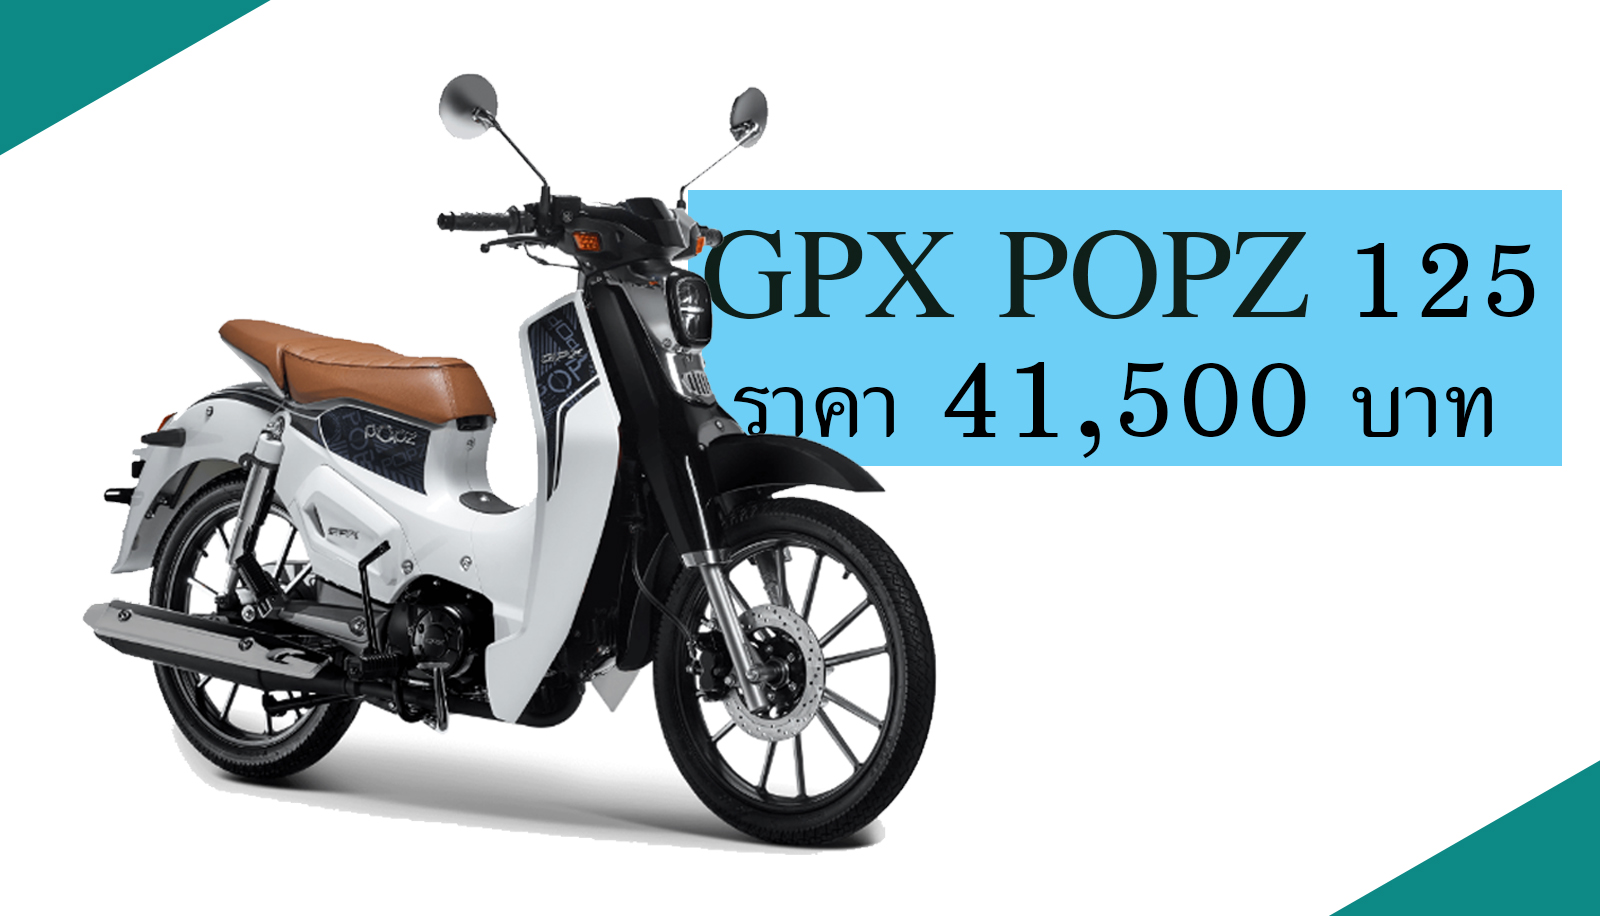 GPX POPZ 125 เคาะราคา 41,500 บาท รถน่ารัก น่าใช้